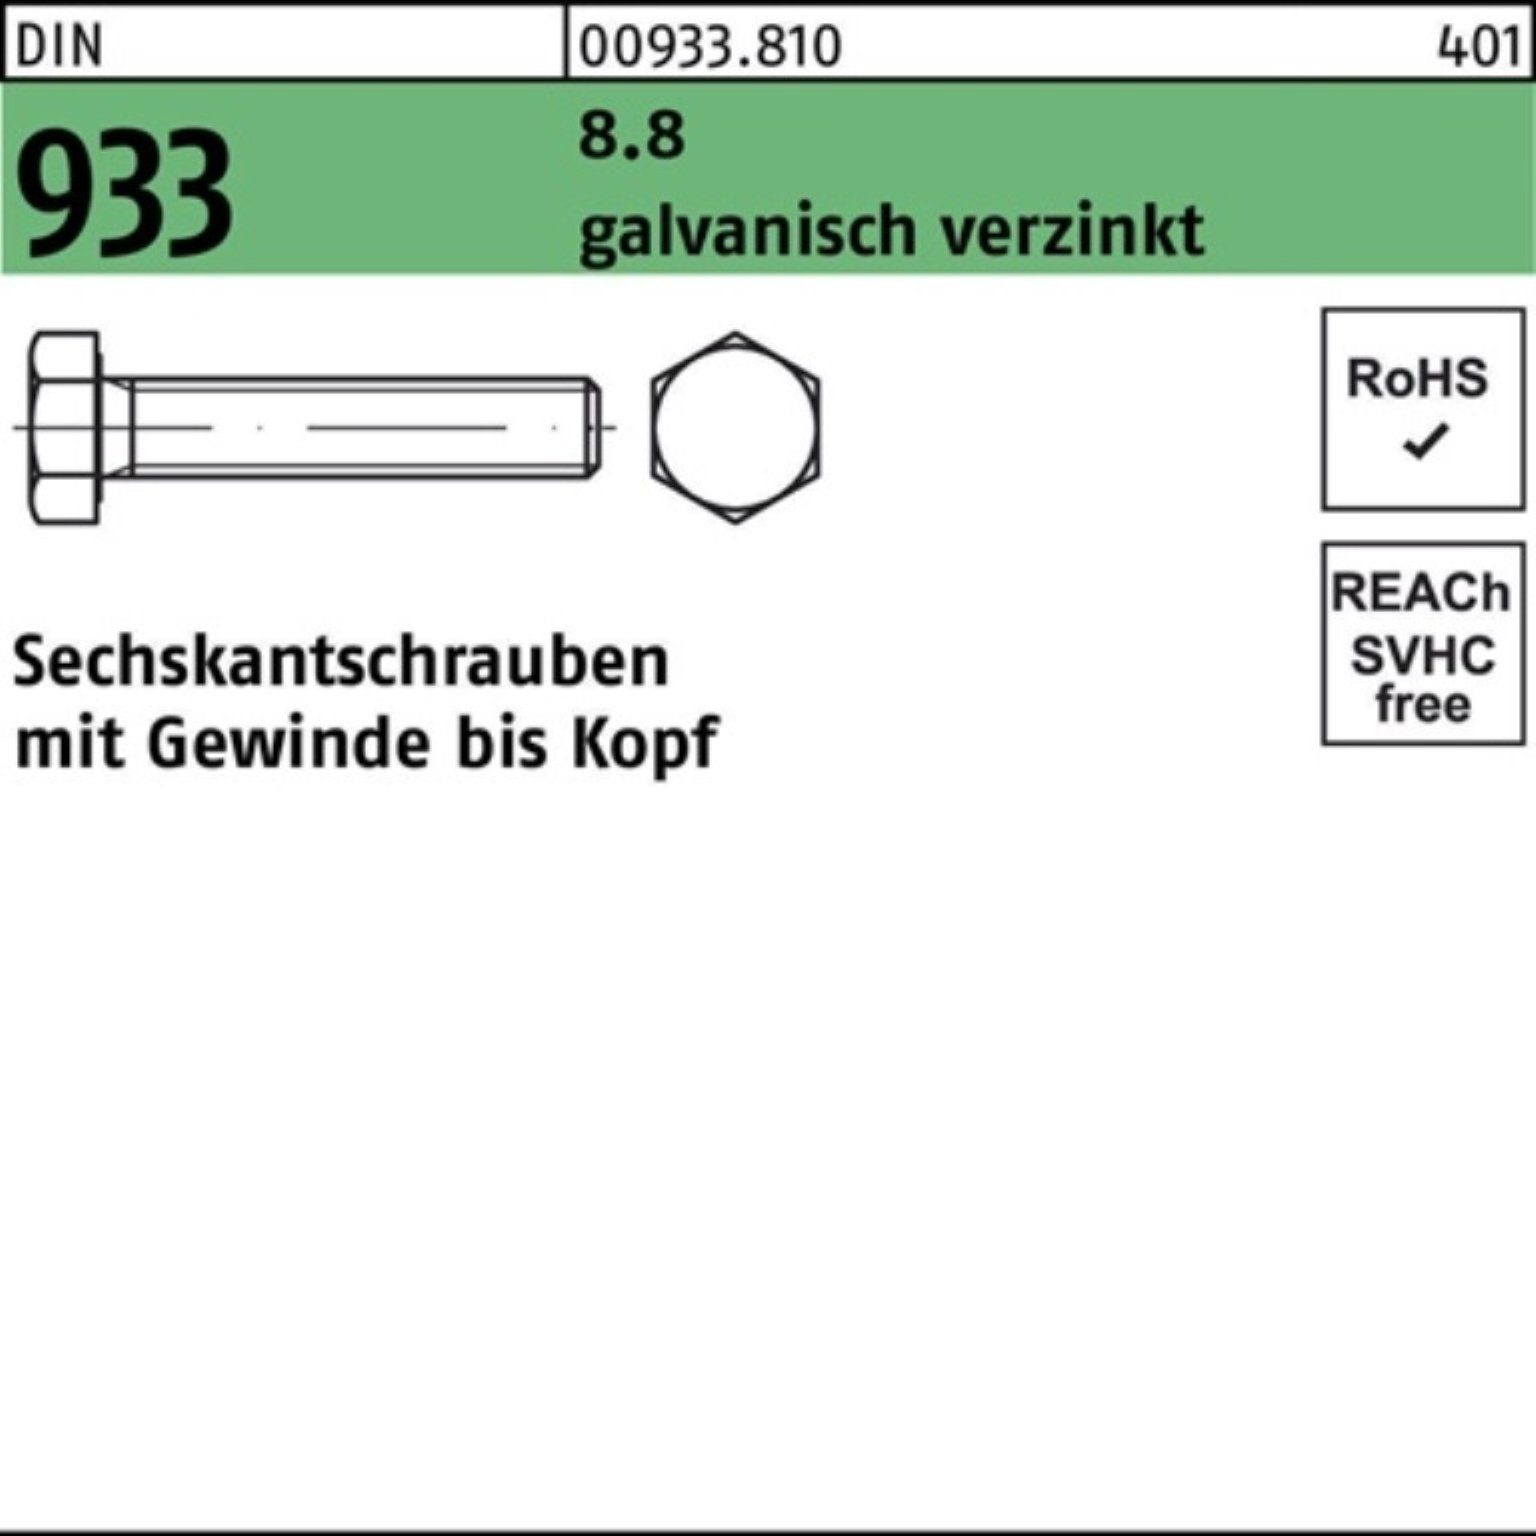 VG Reyher 100er M36x Sechskantschraube Stü DIN galv.verz. 8.8 190 1 Sechskantschraube 933 Pack